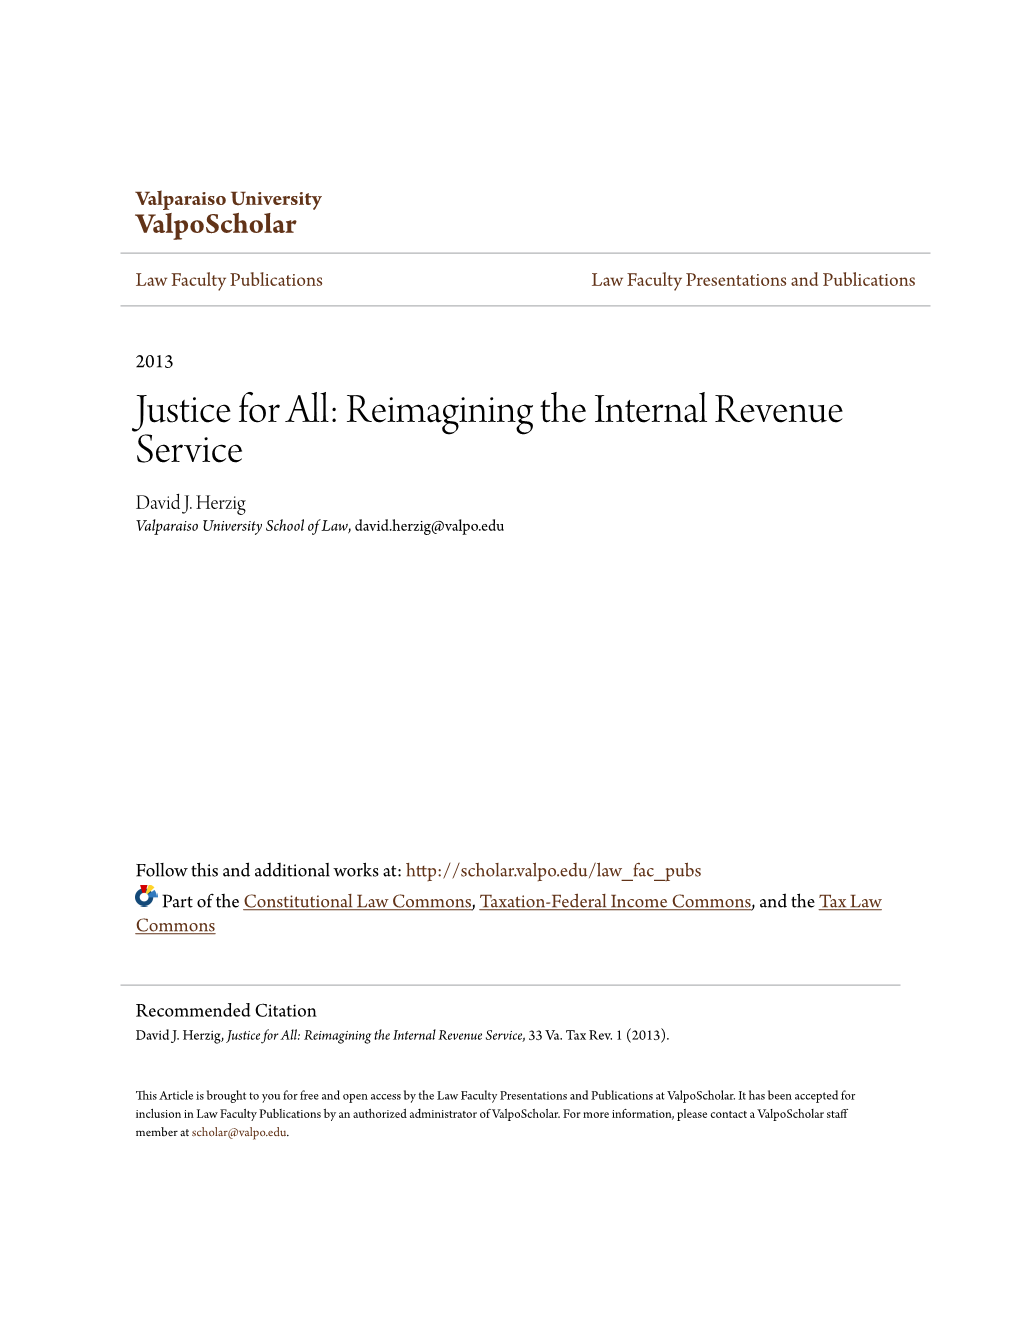 Reimagining the Internal Revenue Service David J